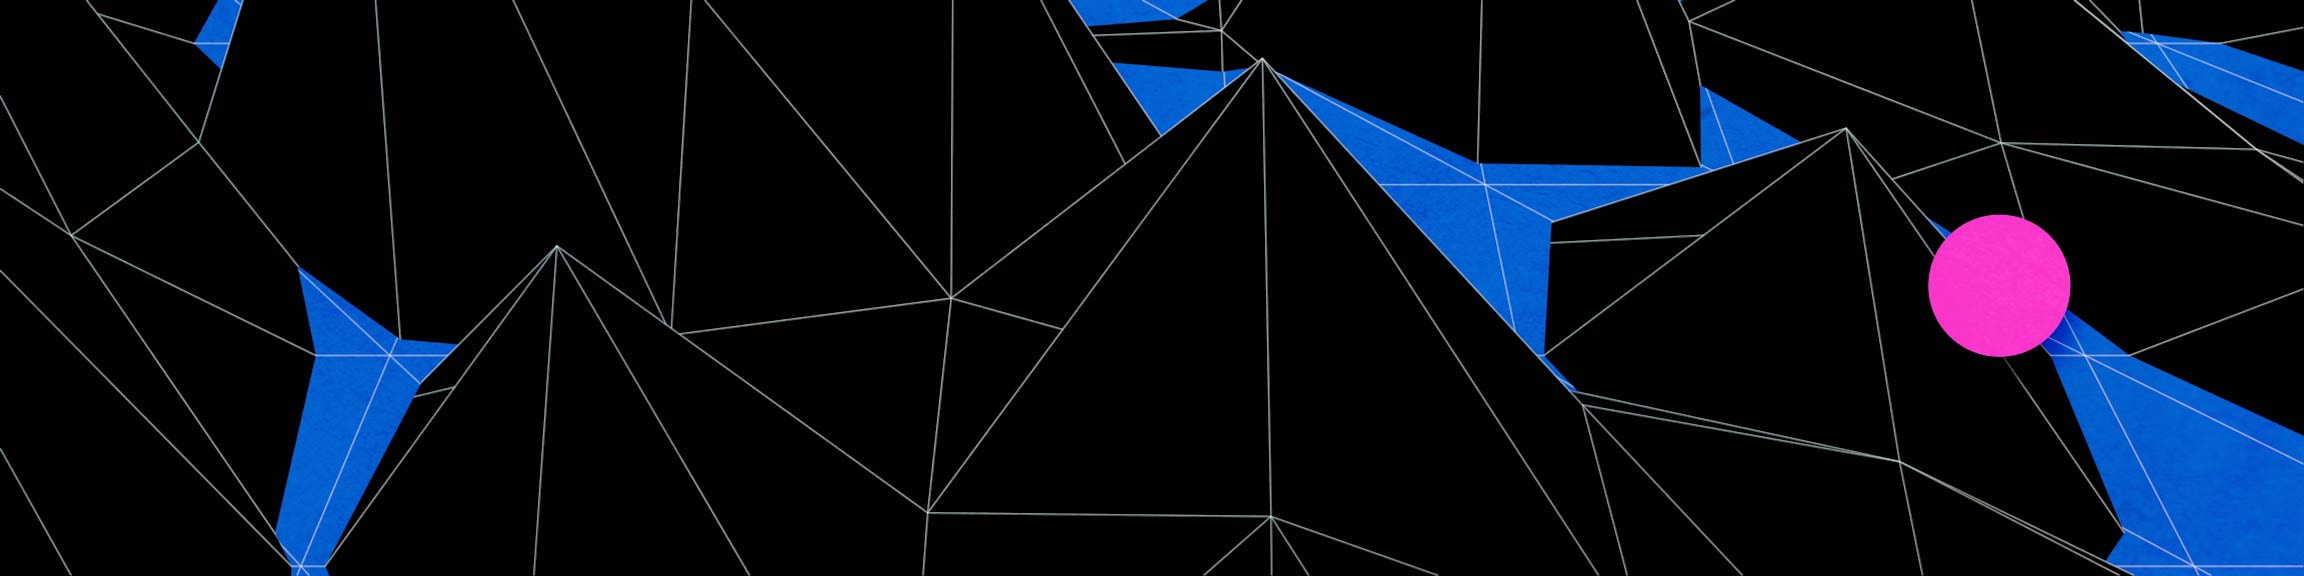 New Order tour geometric lines